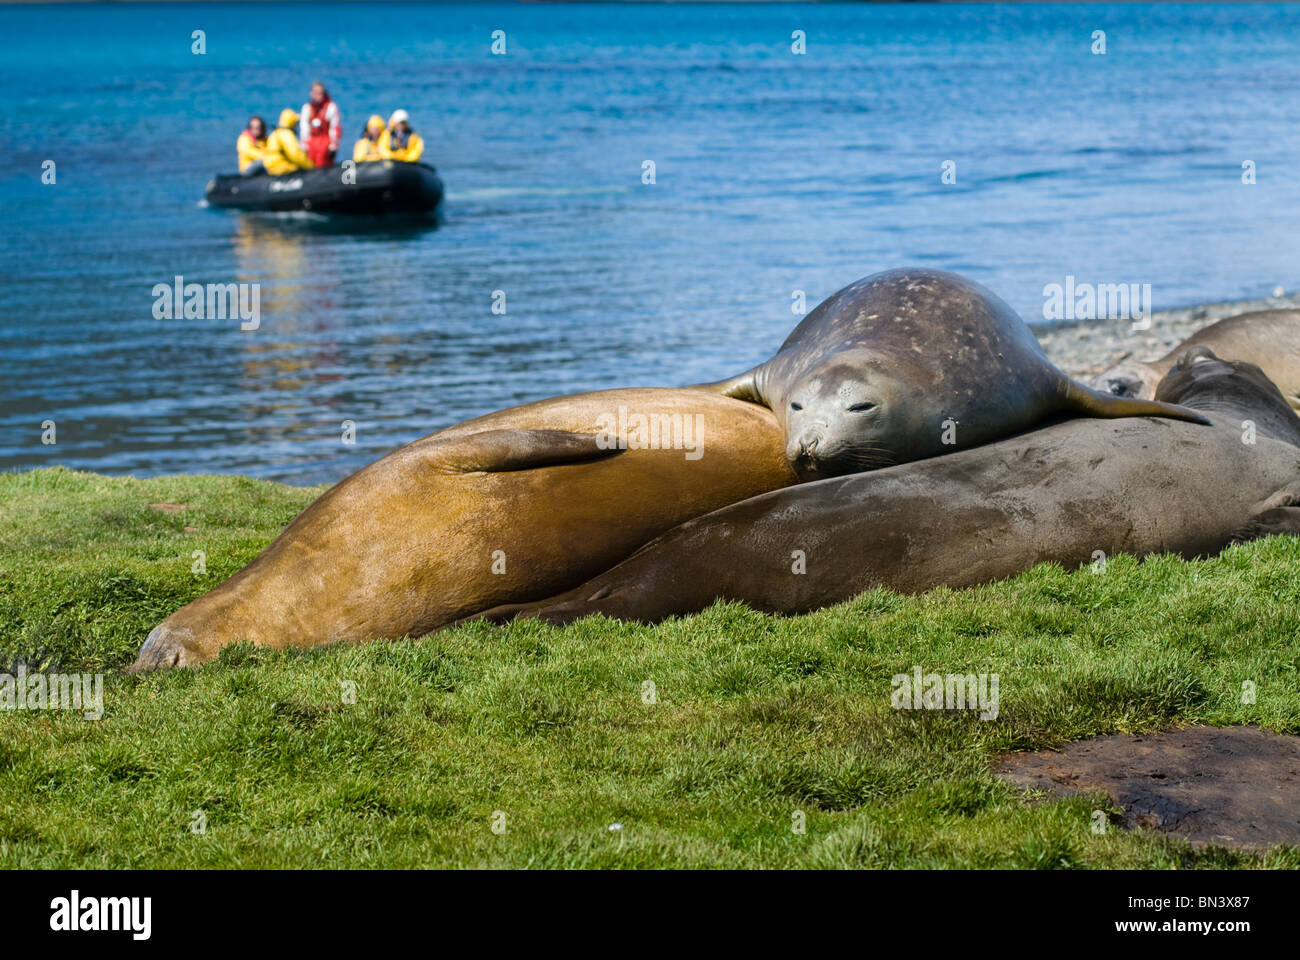 Sleeping Southern Elephant Seals, Mirounga leonina, tourists on boat in background, South Georgia Stock Photo